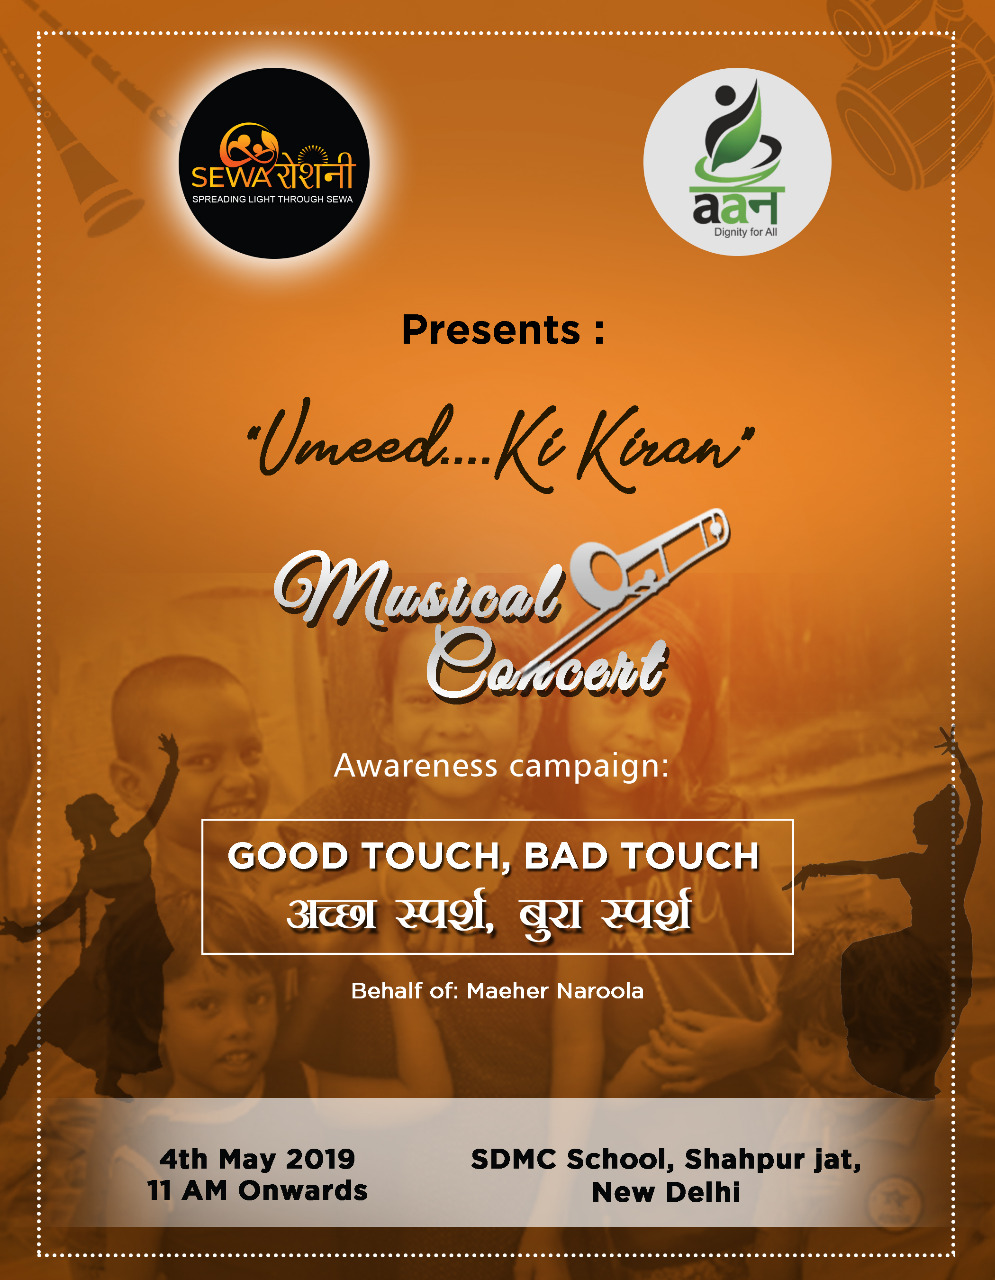 Upcoming event - Musical Concert “Umeed Ki Kiran<br><br>